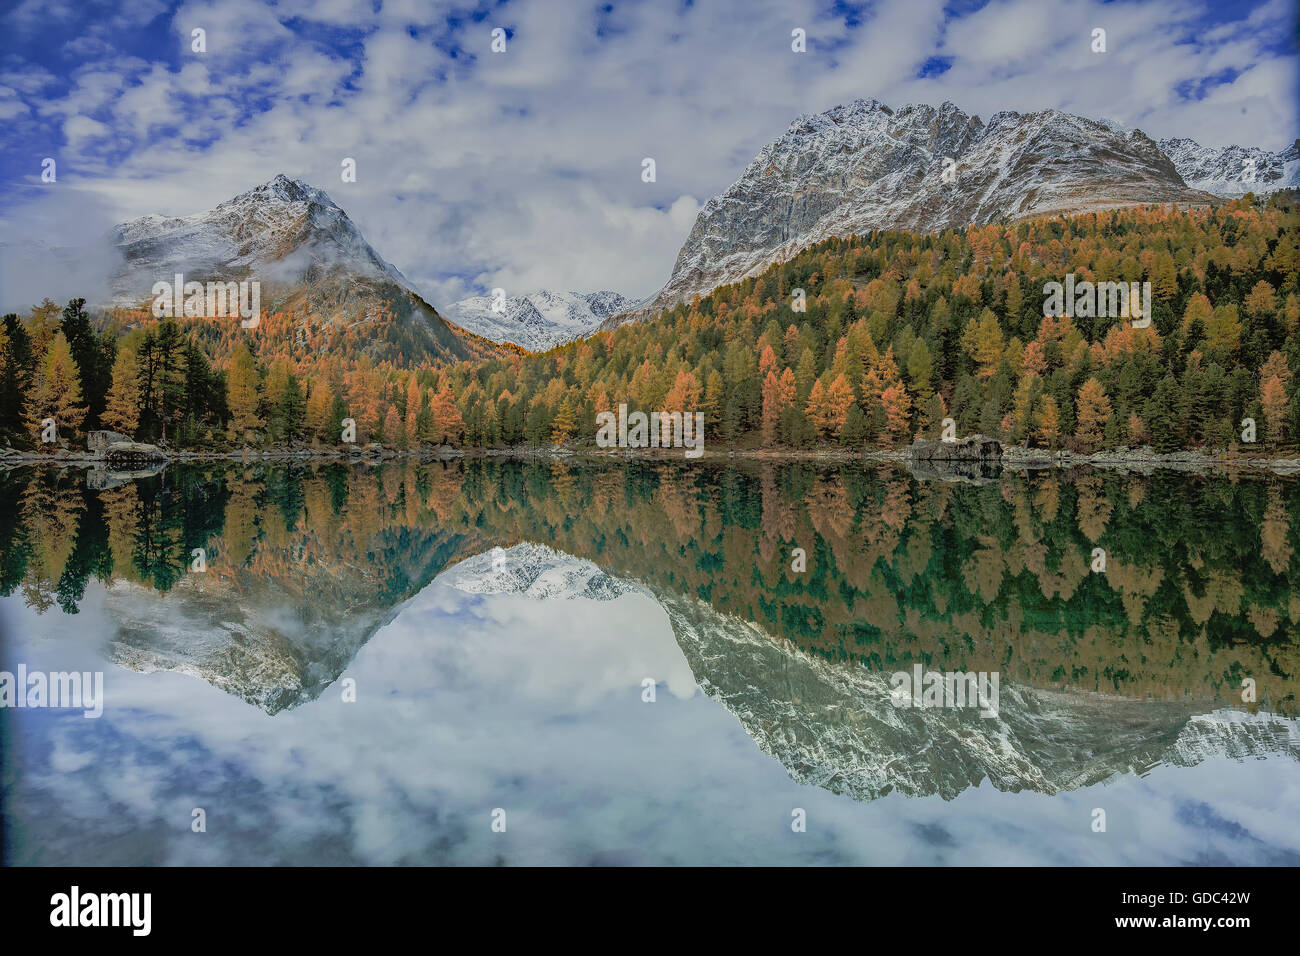 Nature,Landscape,Mountain,Lake,Mountain lake,Autumn,Snow,Saoseosee,Graubünden,Grisons,Switzerland,Alps,Tree,Trees, Stock Photo